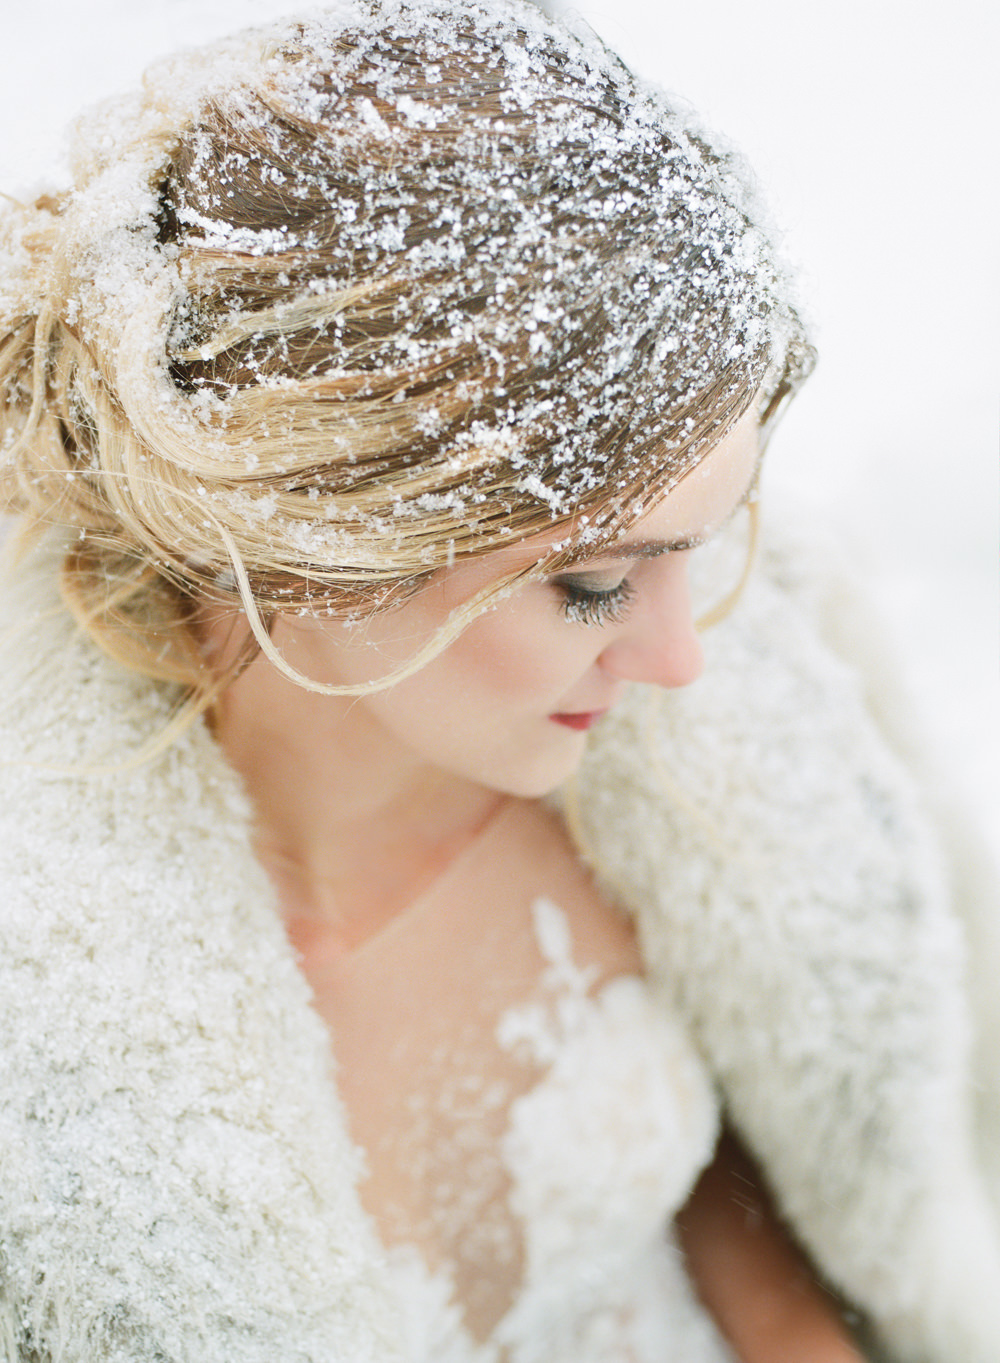 Winter wedding, Bride with fur coat in snow; St. Louis fine art film wedding photographer Erica Robnett Photography